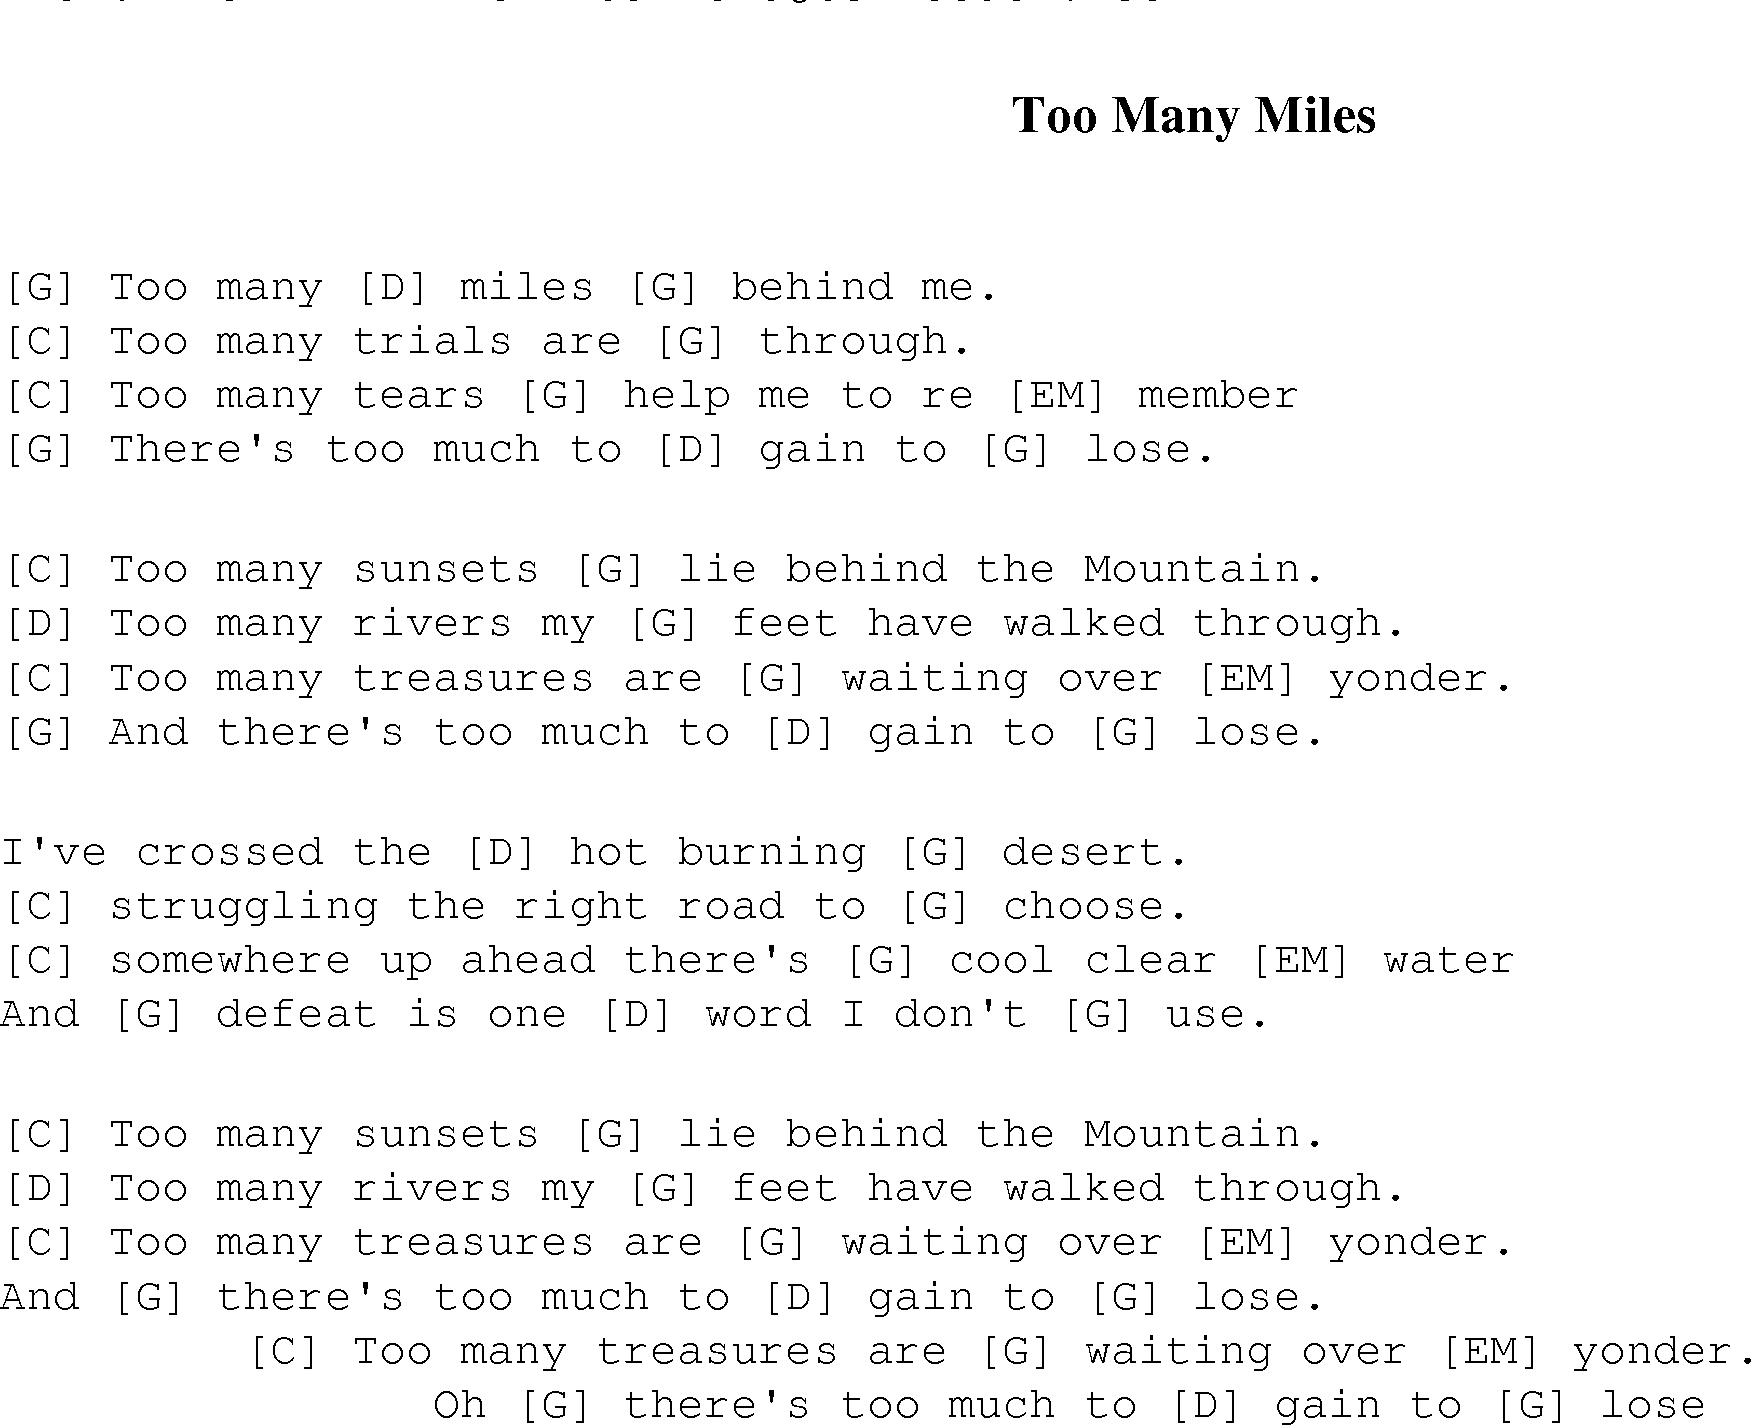 Too Many Miles - Christian Gospel Song Lyrics and Chords